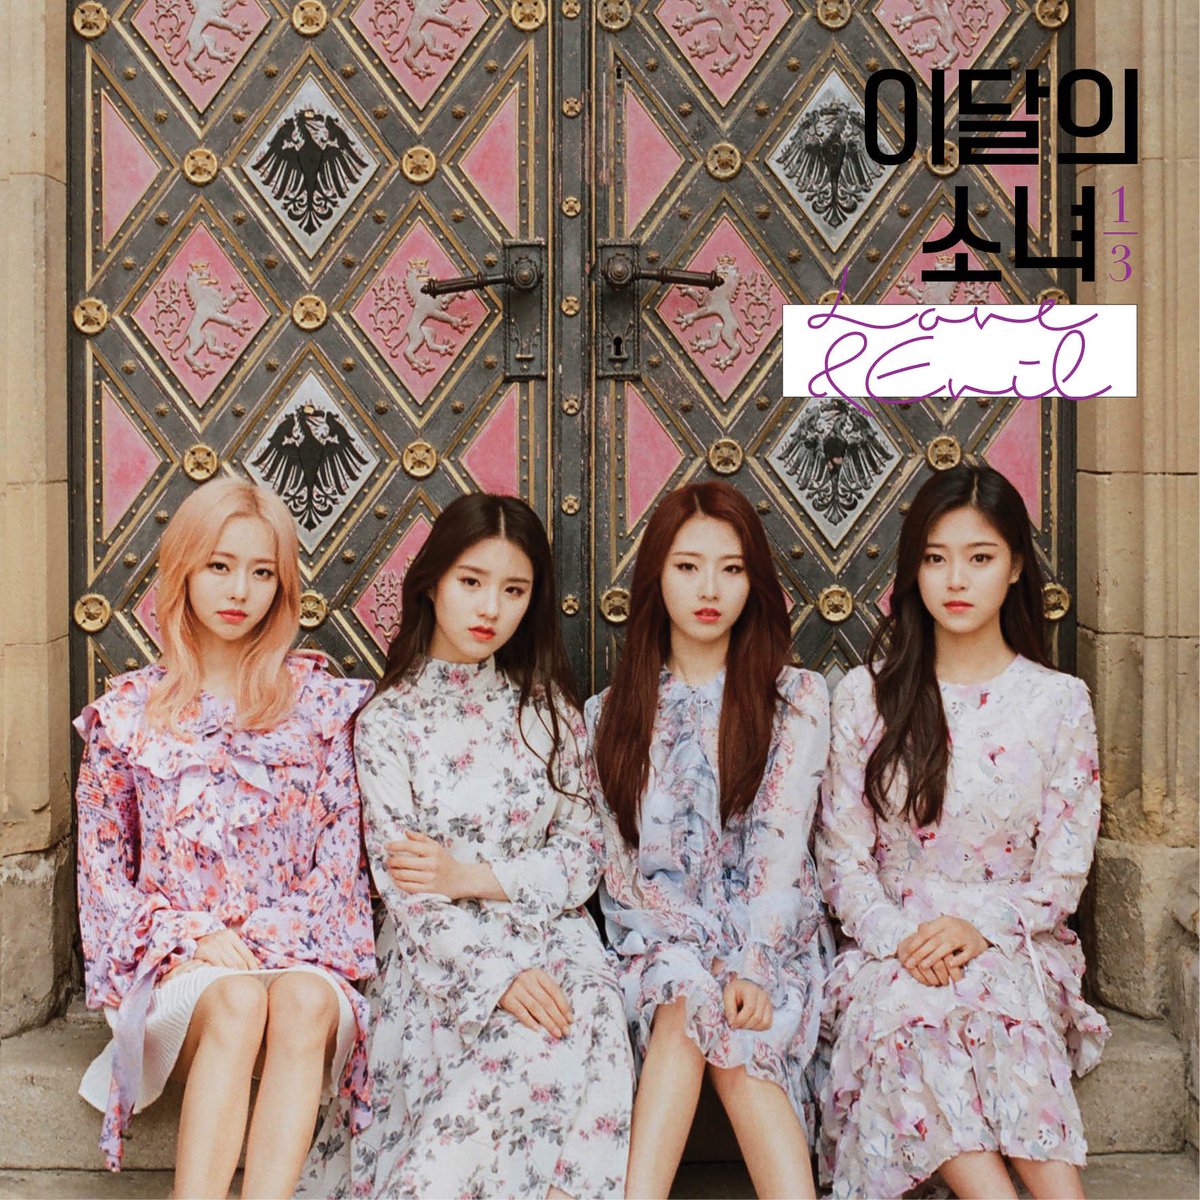 seonghwa as loona albums, a thread